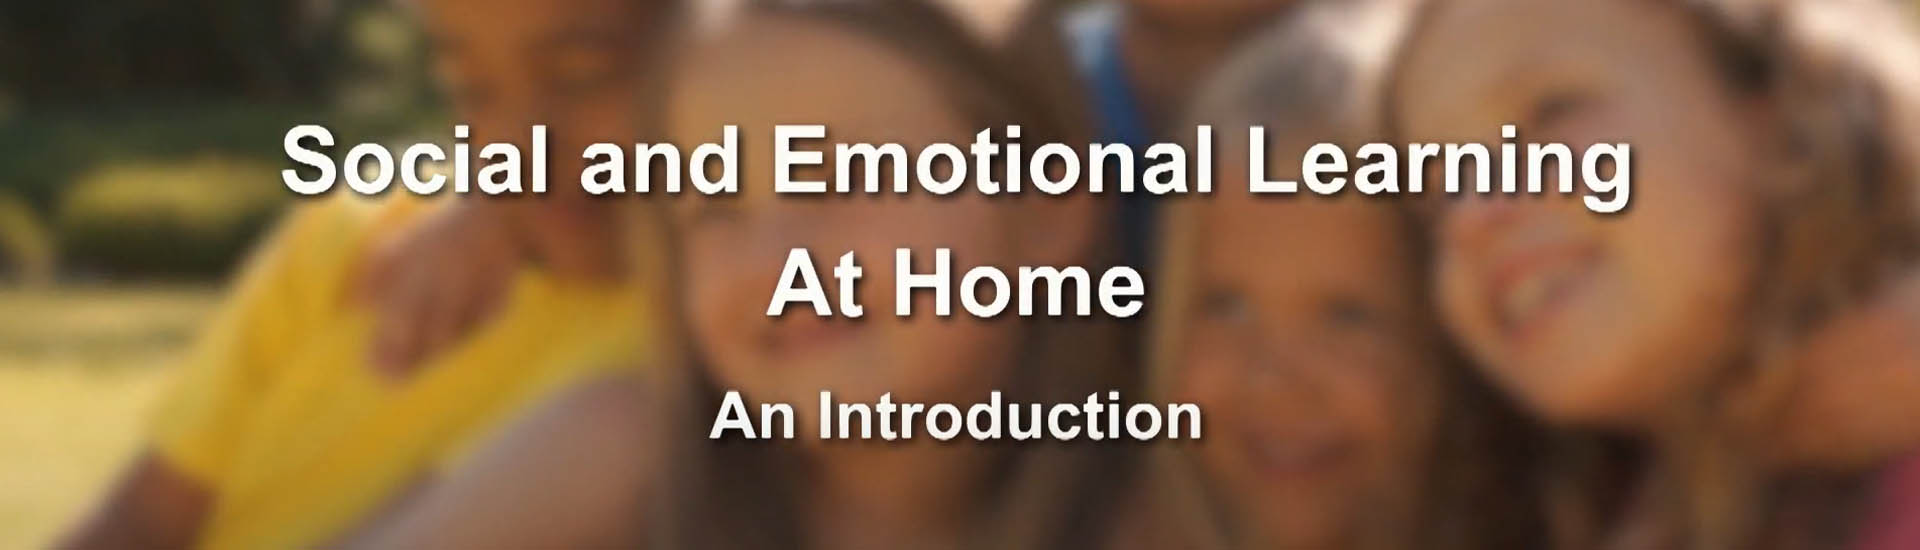 Social-Emotional Learning (SEL) @ Home